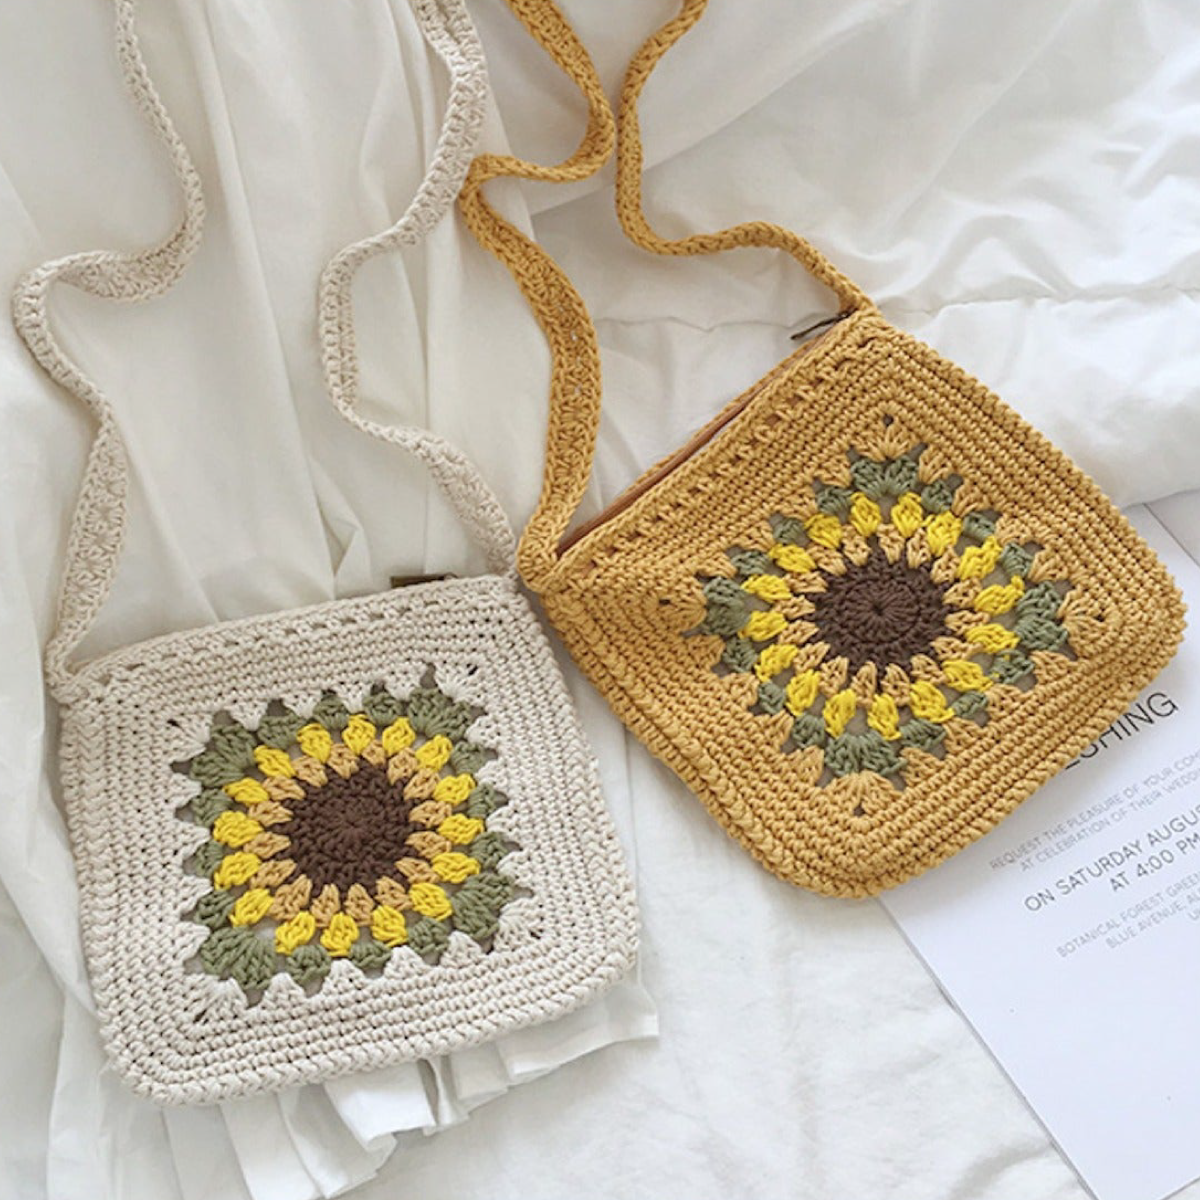 FREE Shipping Handmade Crochet Bag Handle Cover. Crochet 